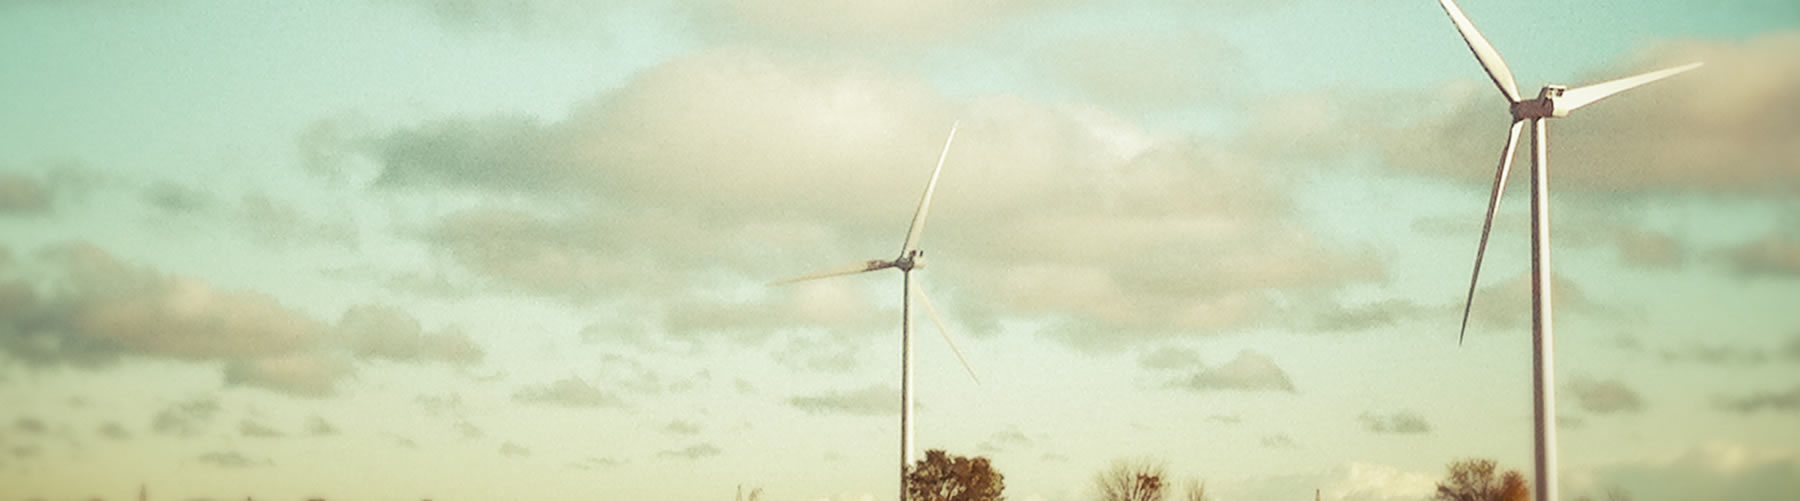 Ontario Farm With Wind Turbines 